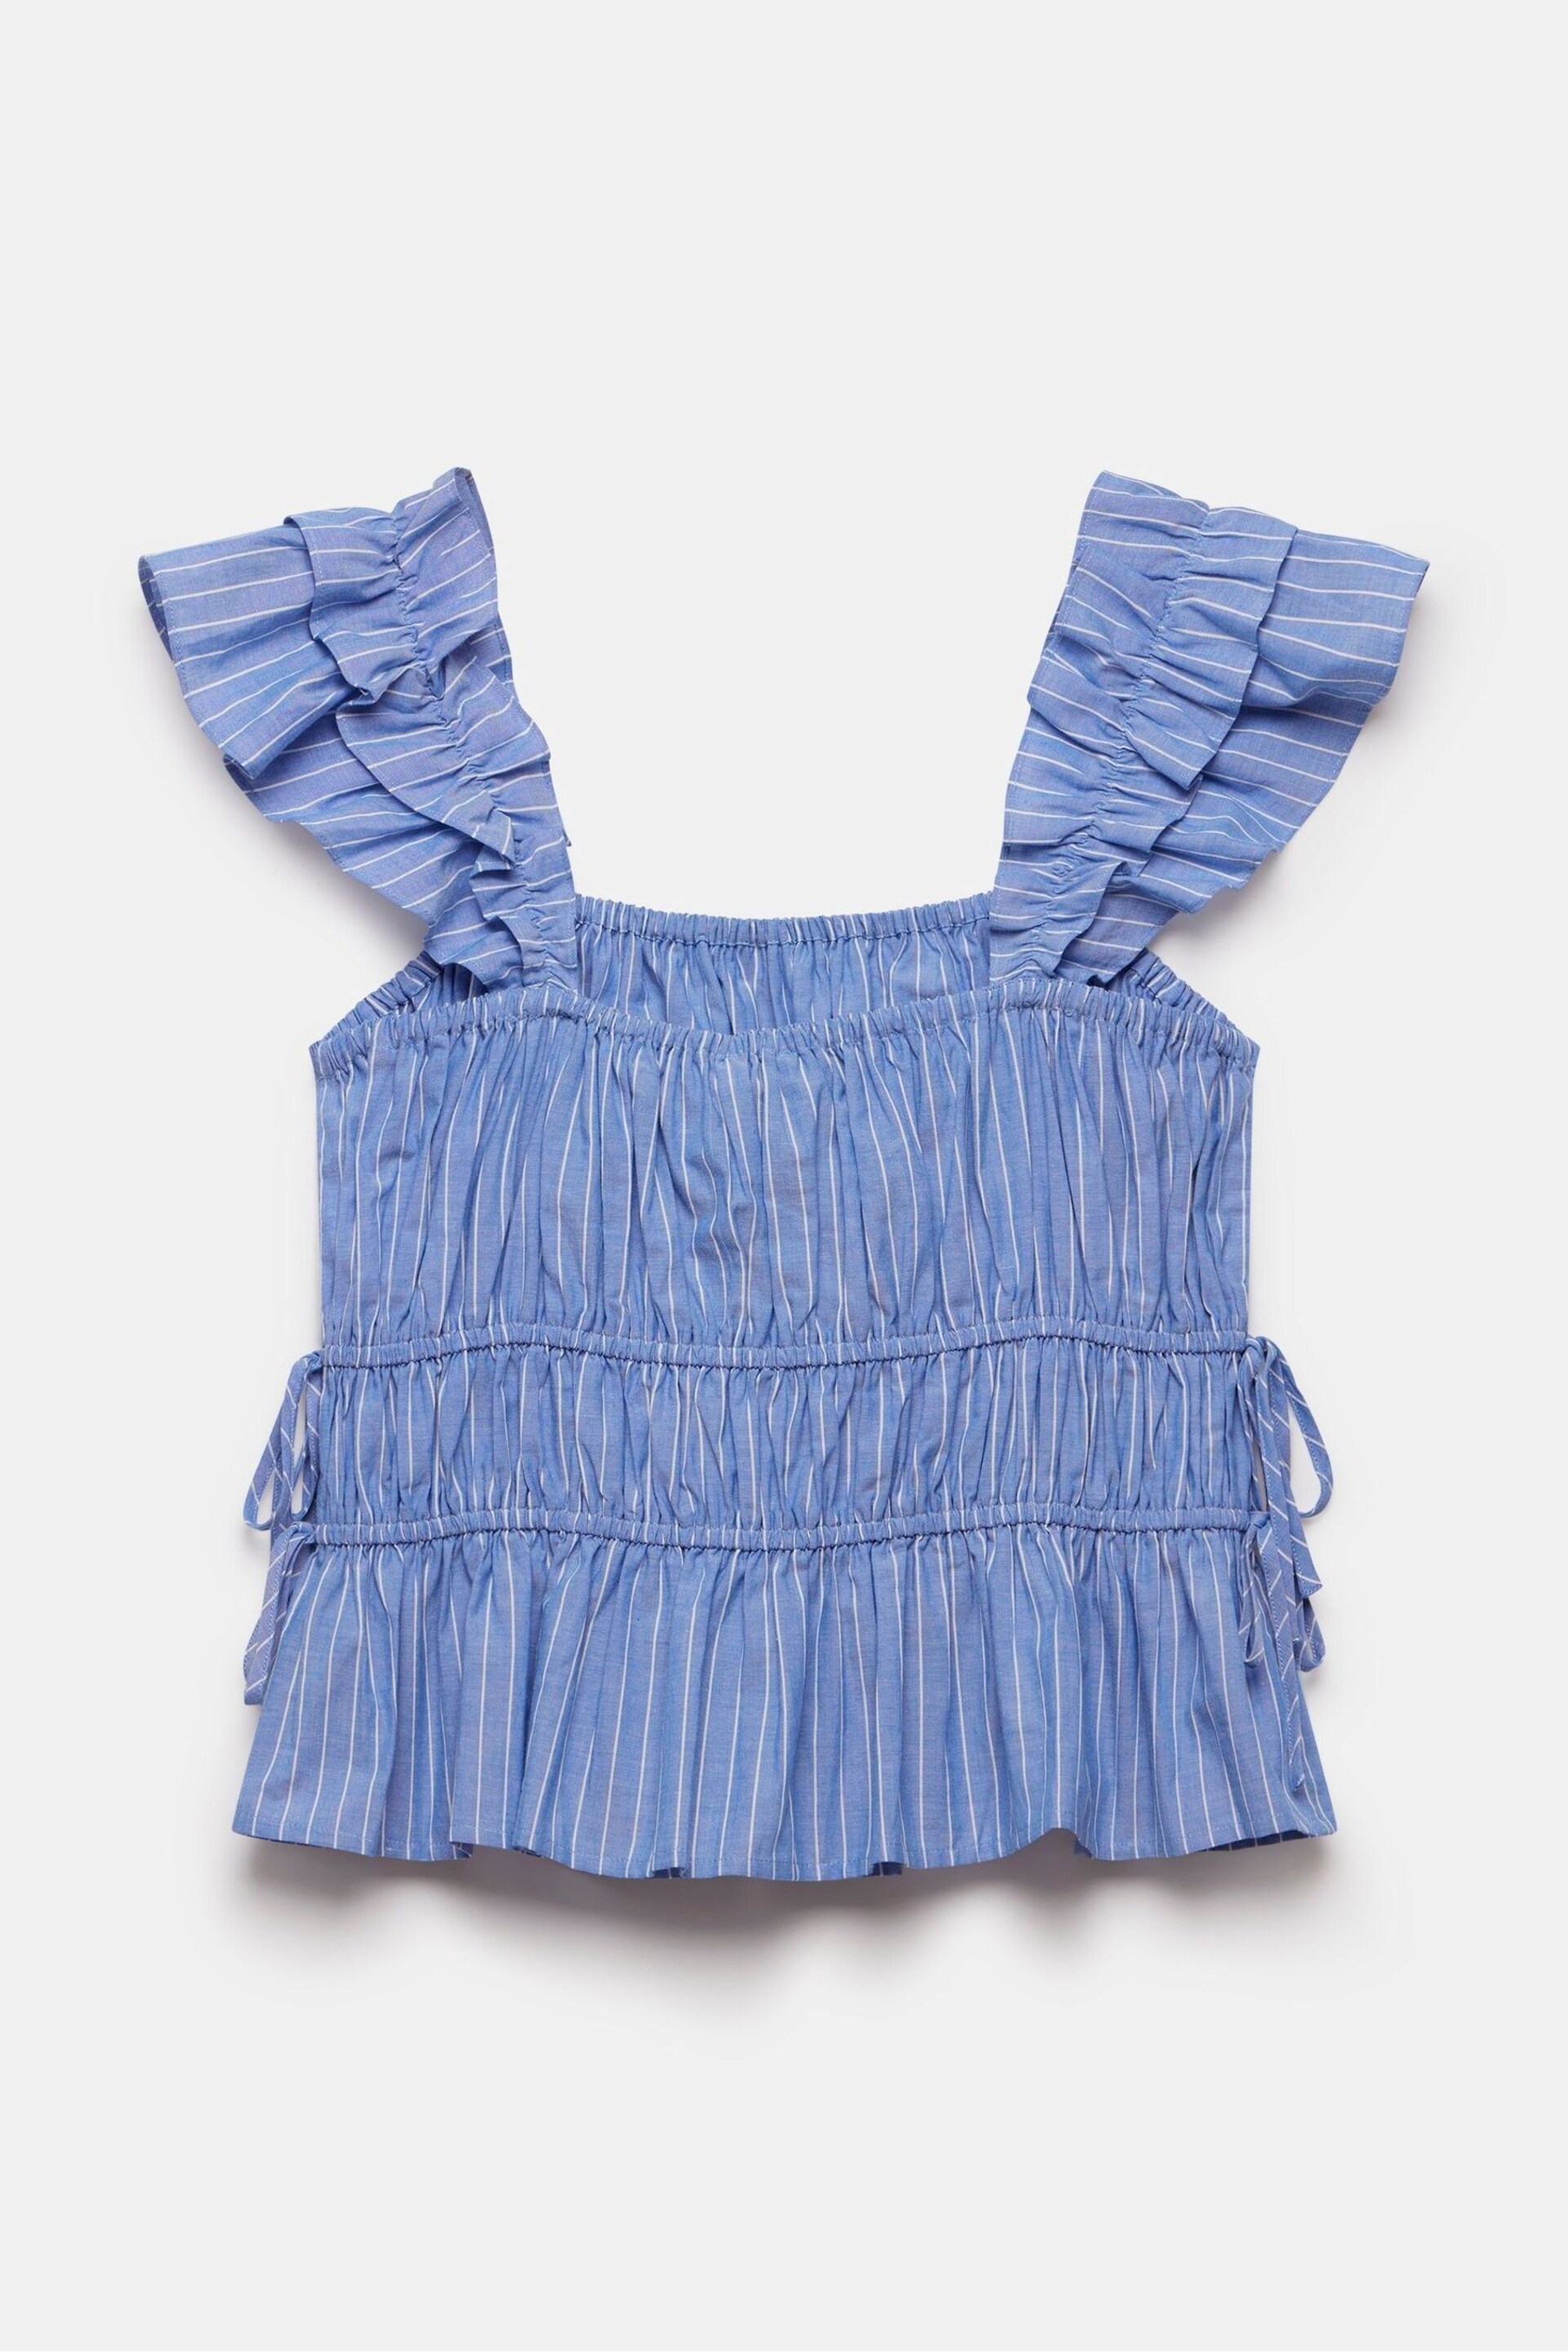 Mint Velvet Blue Striped Cotton Cami Top - Image 4 of 4